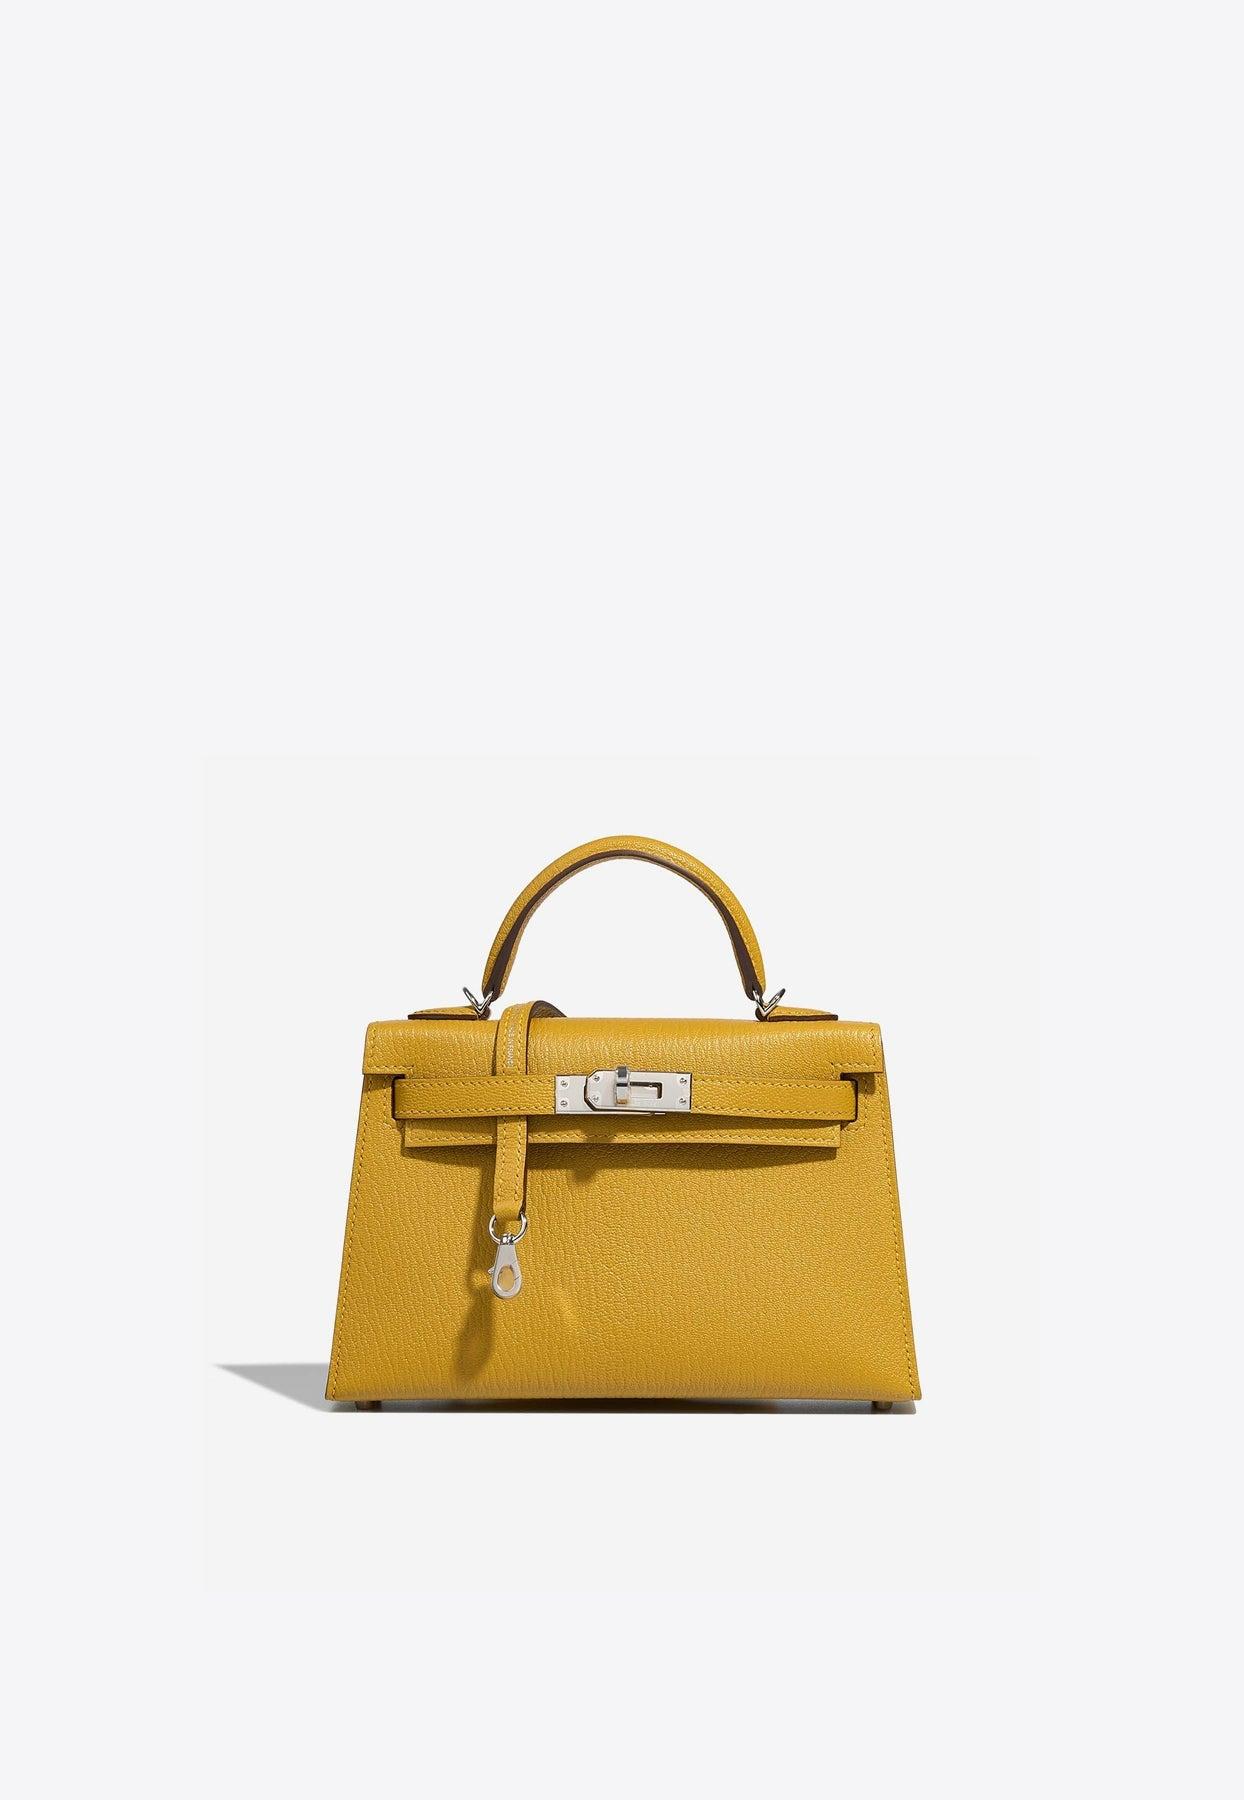 Hermes Yellow Swift Leather Palladium Hardware Pochette Kelly Clutch Bag  Hermes